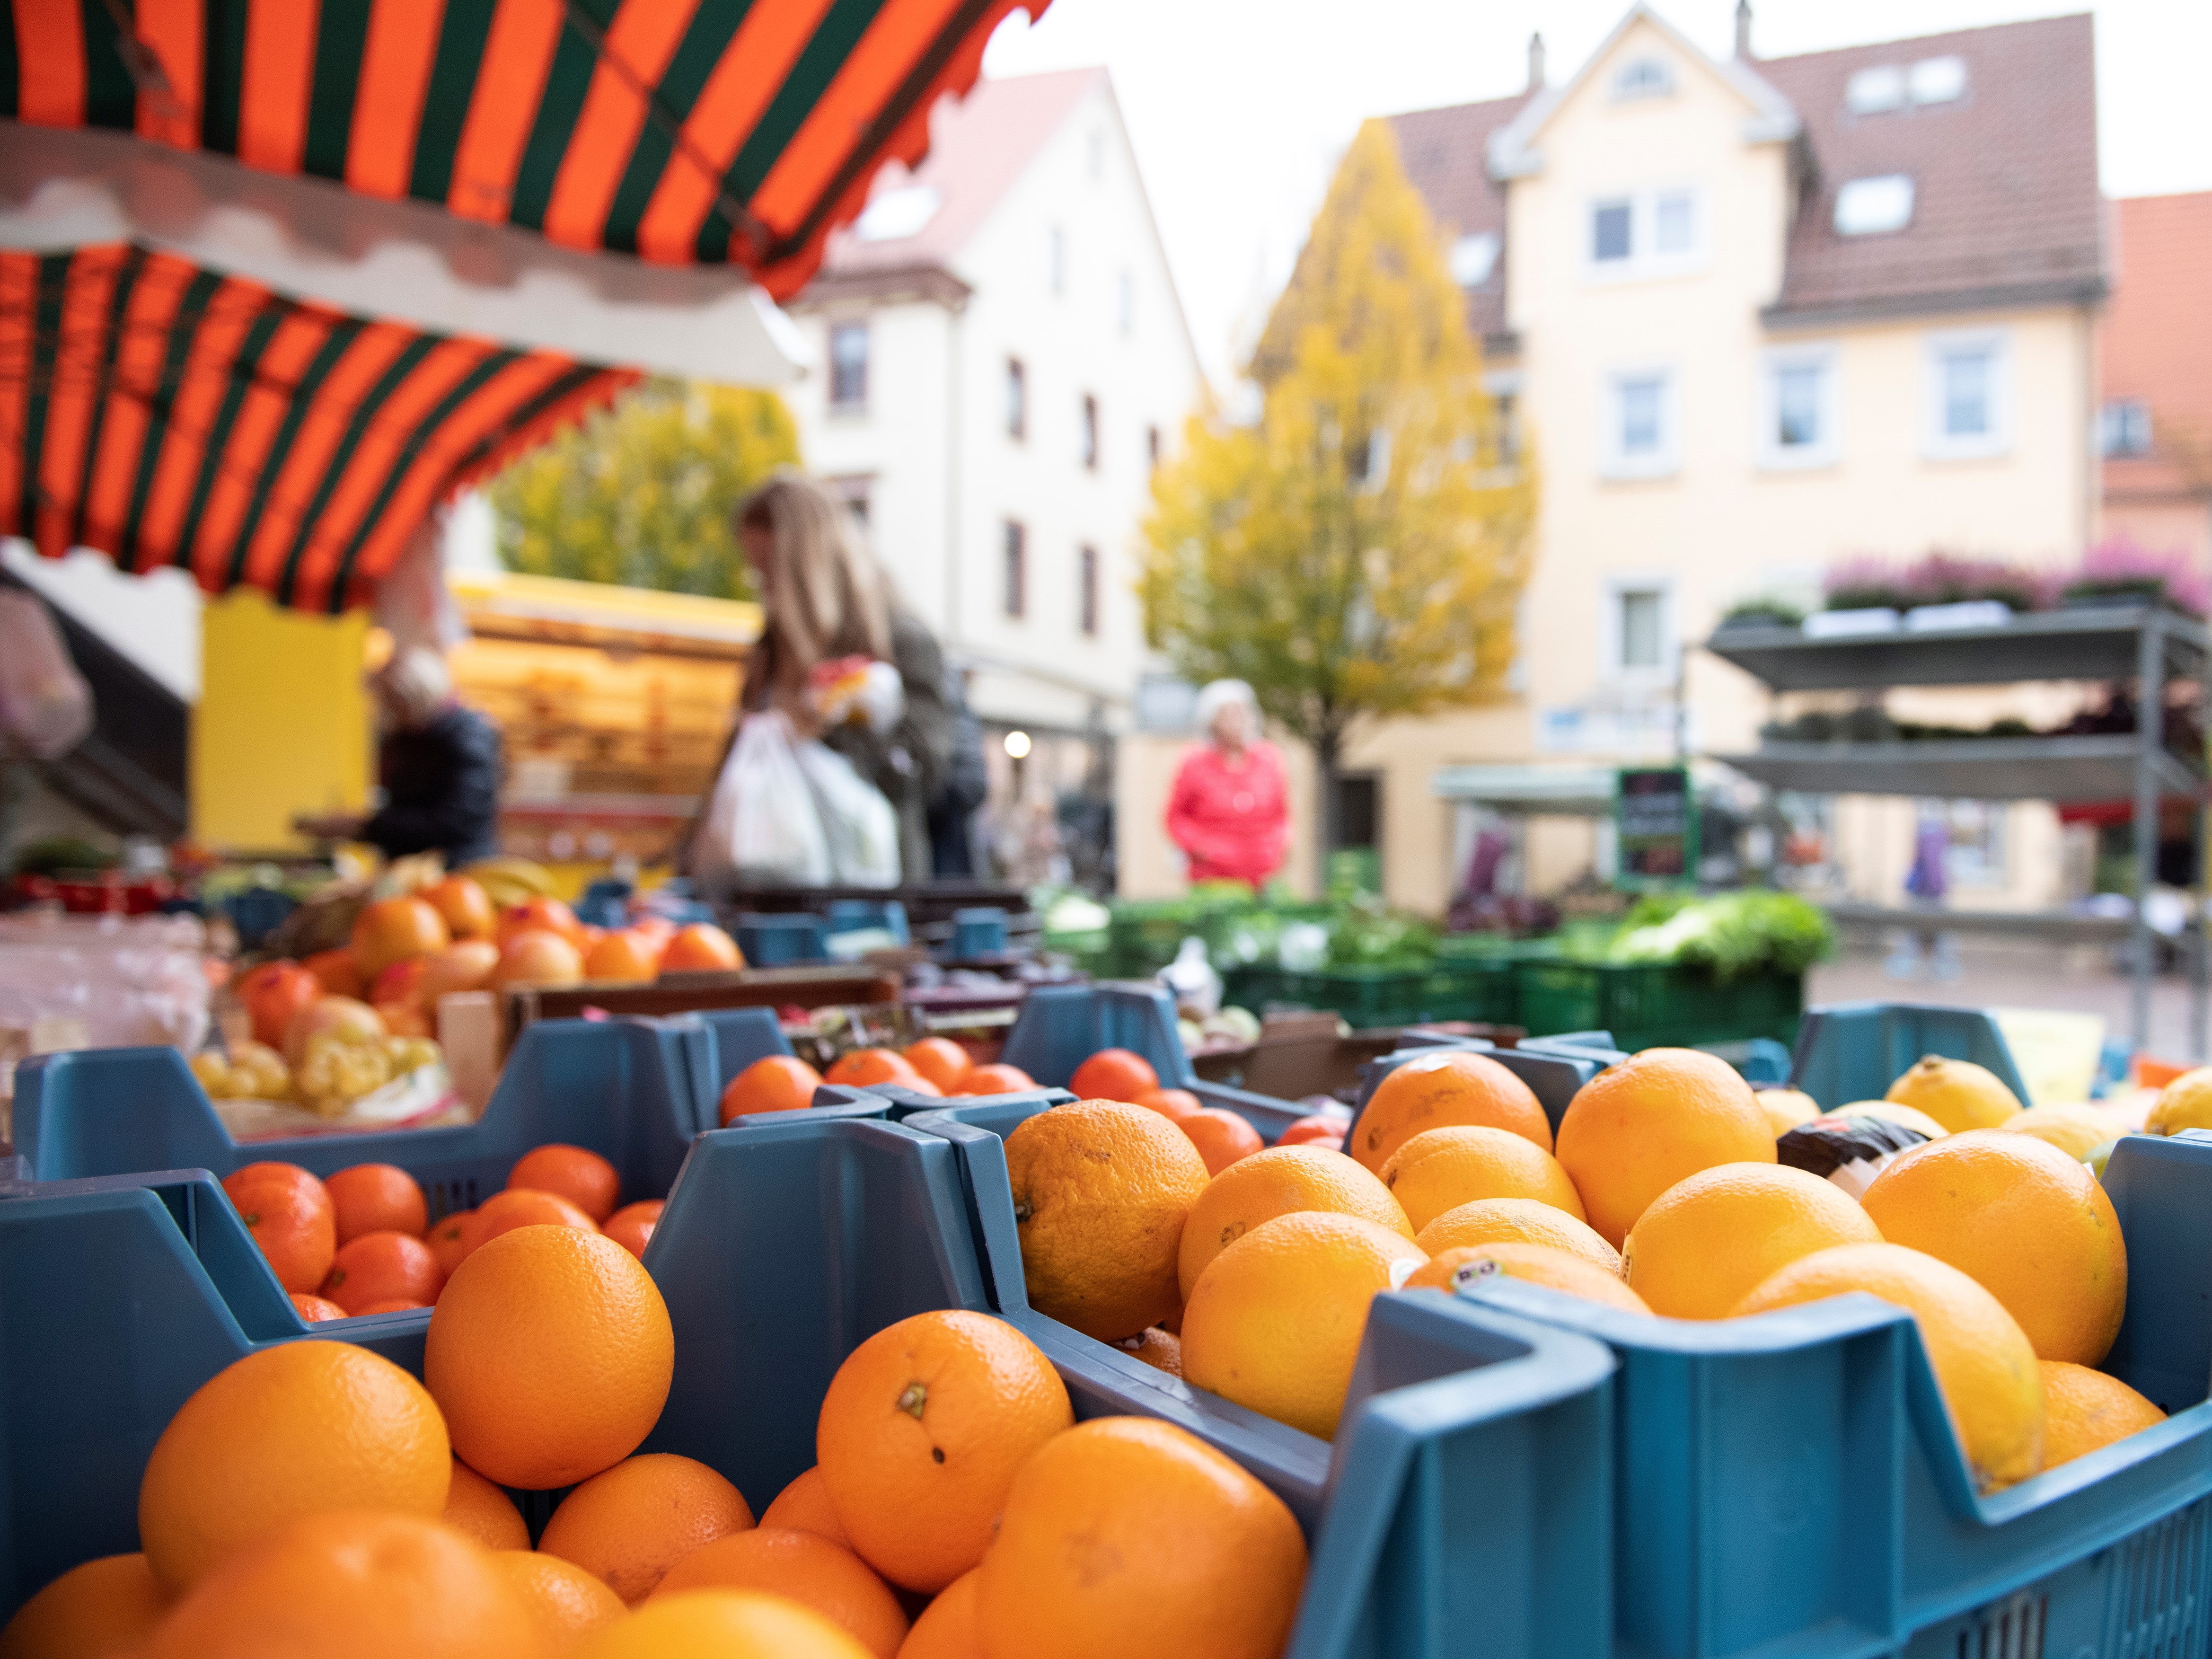 Orangen in Korb am Marktstand